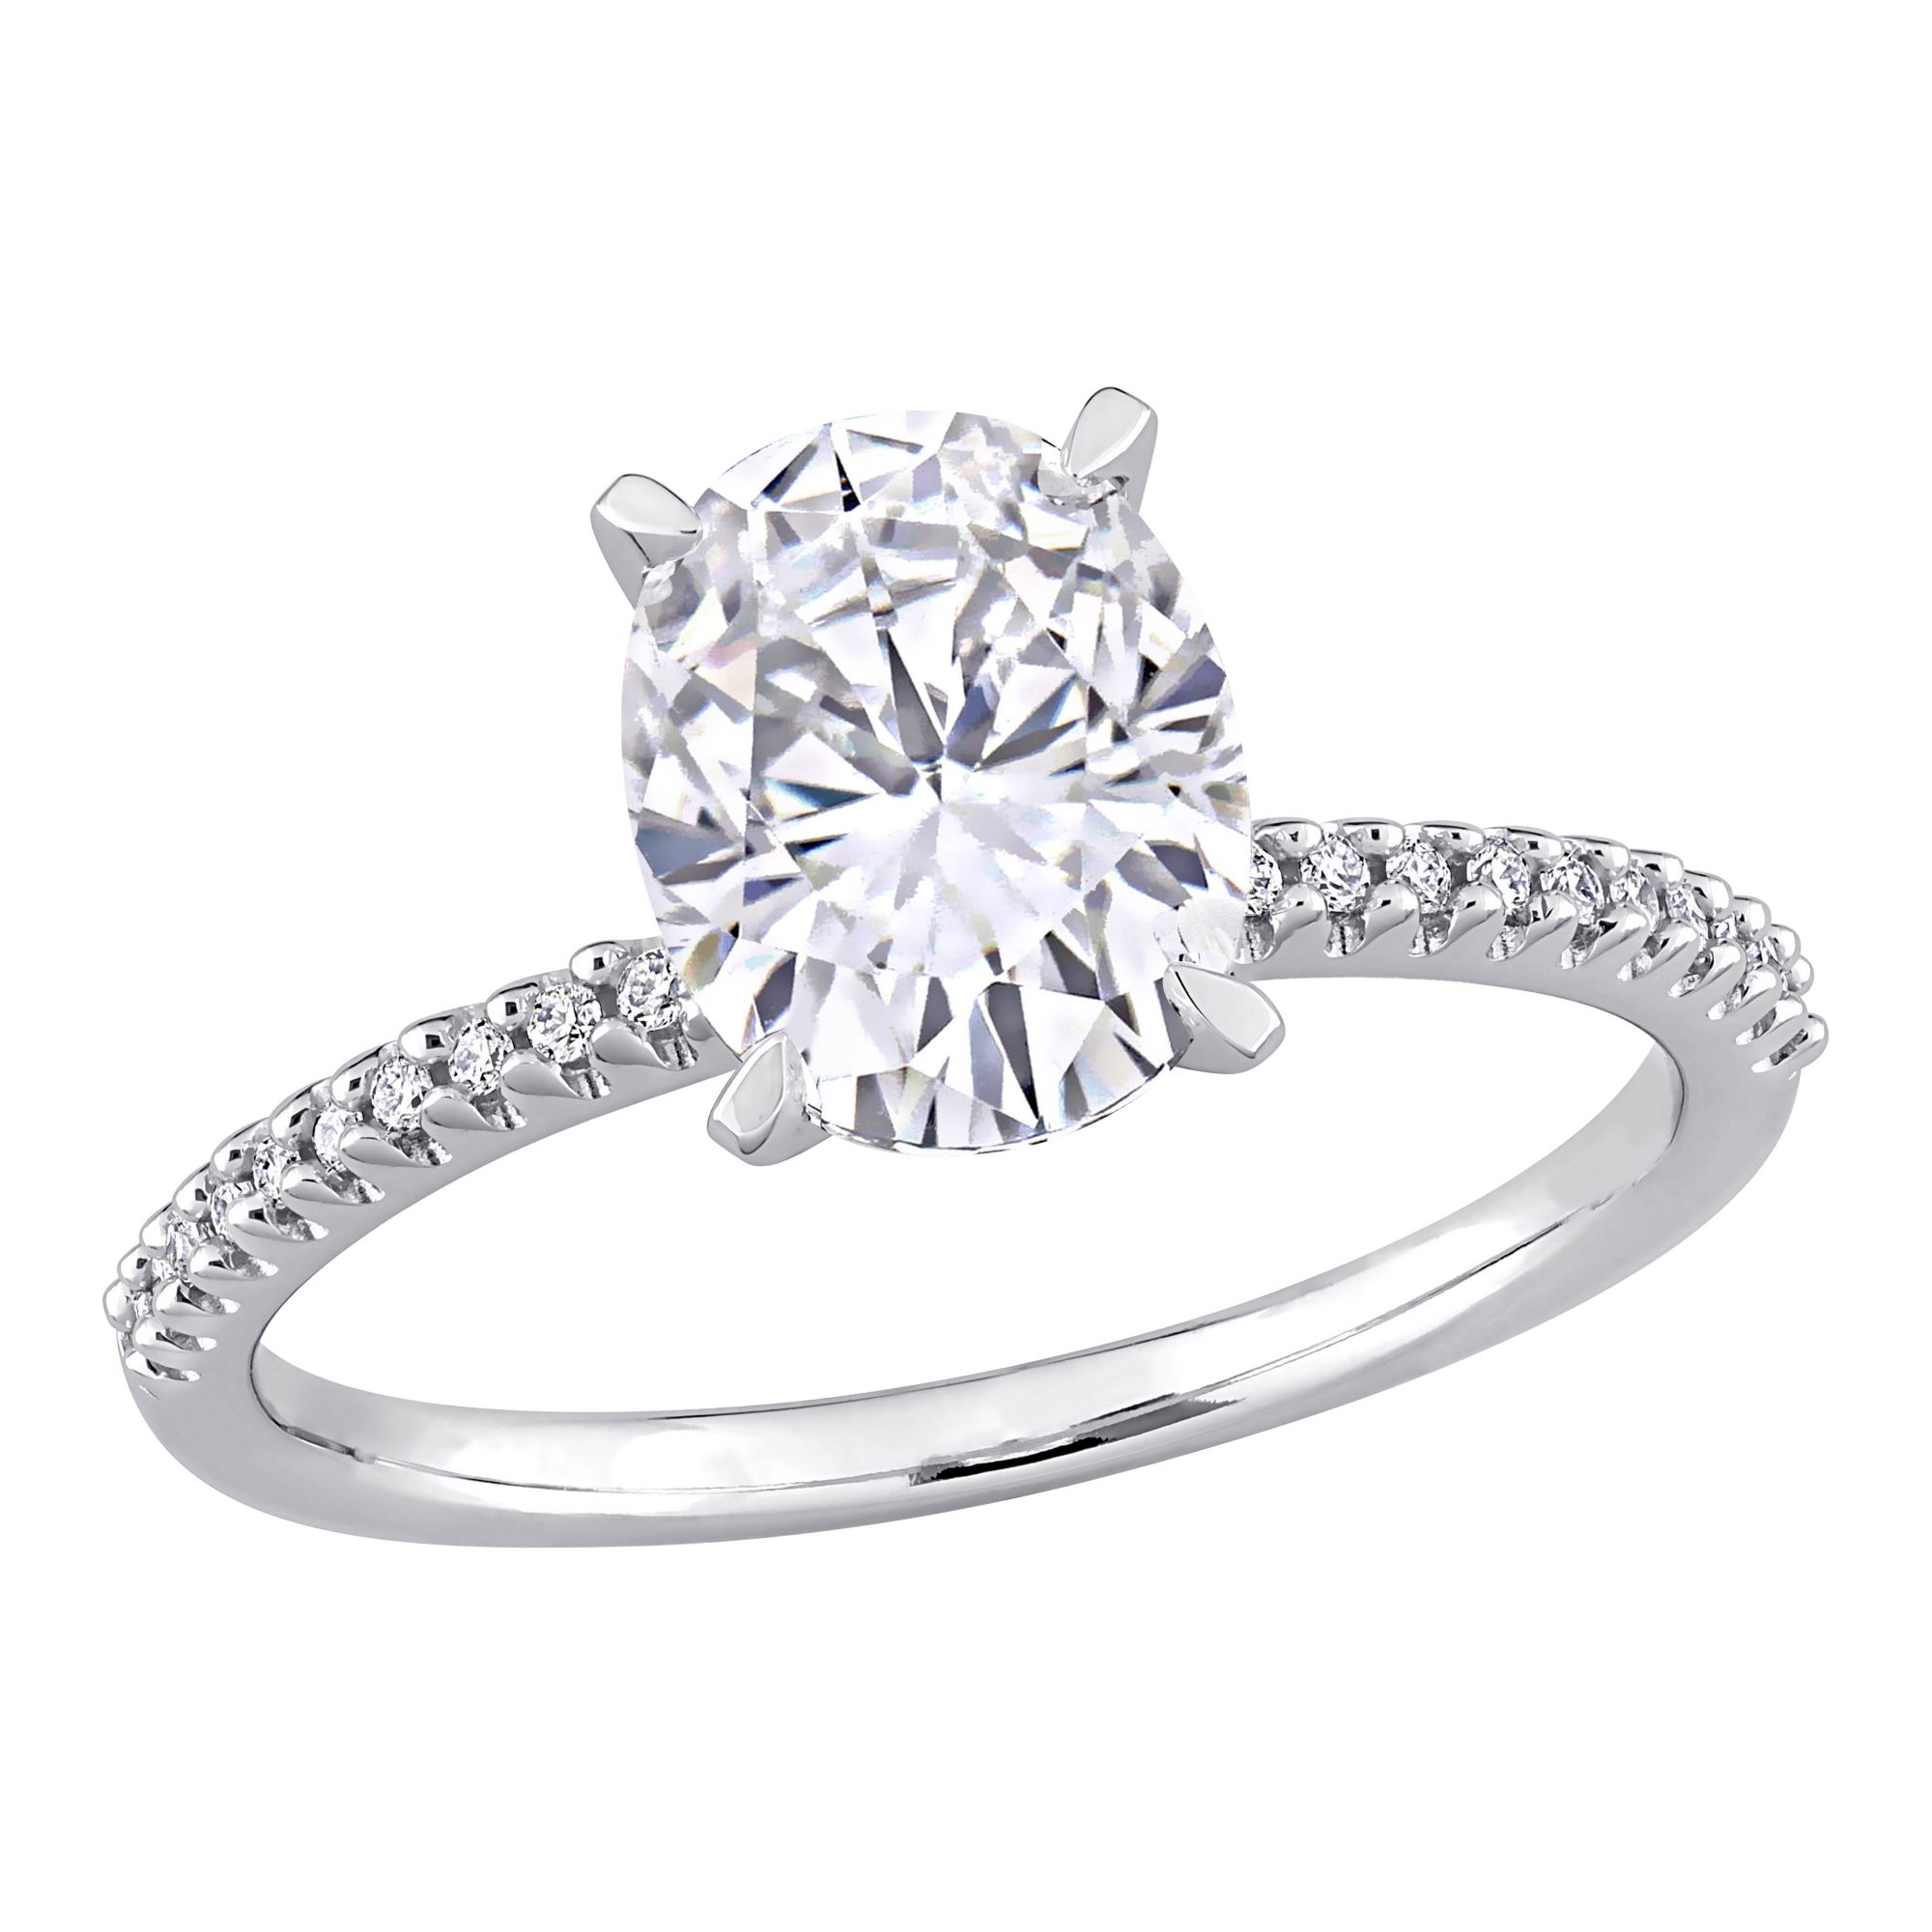 3ct Enhanced Round Diamond Solitaire Engagement Ring 14K White Gold